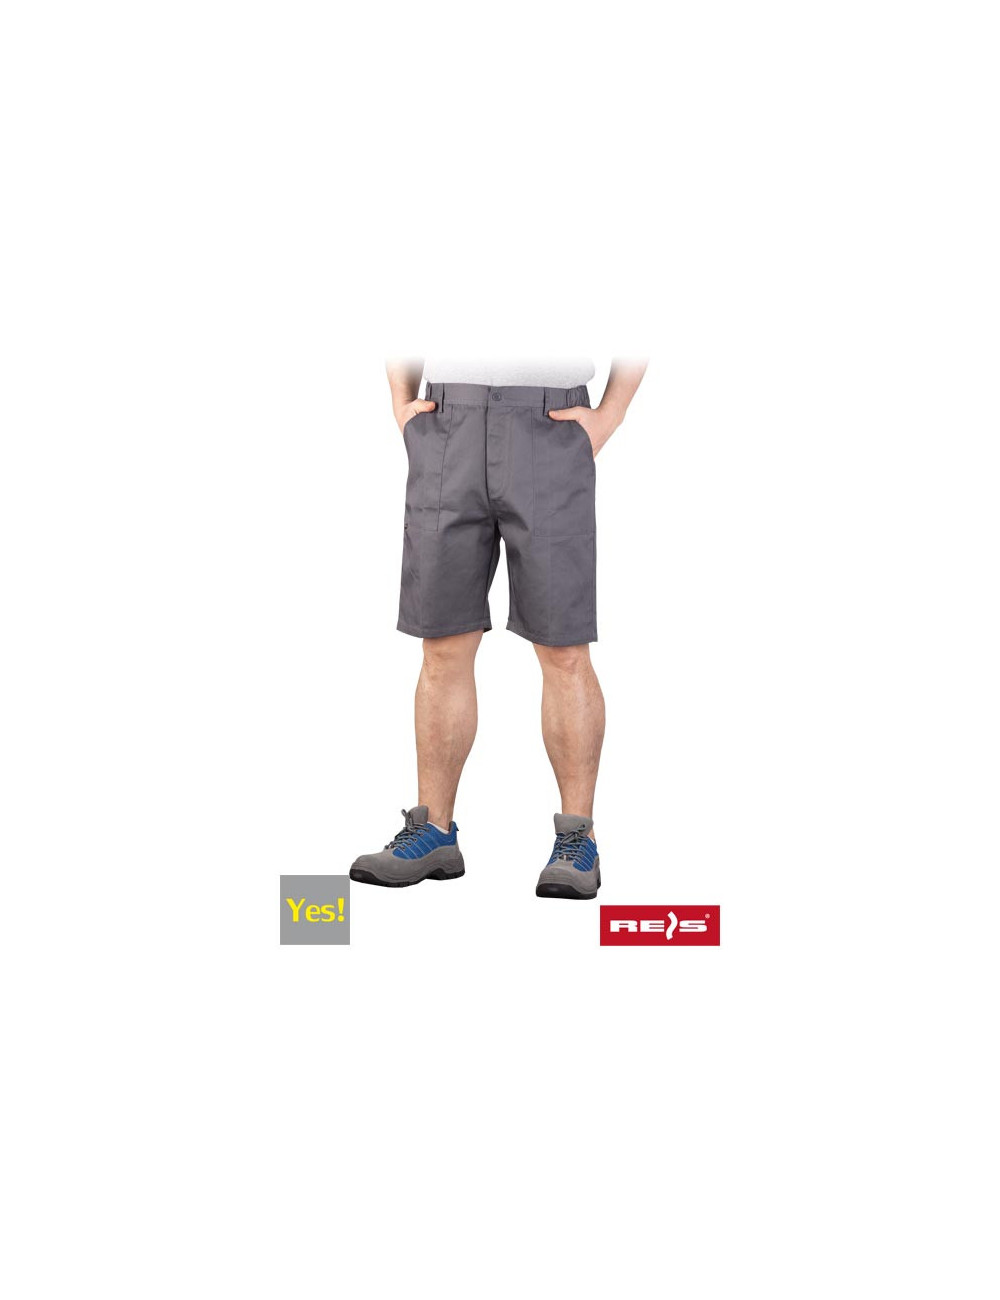 Waist trousers - short yes-ts s gray/steel Reis